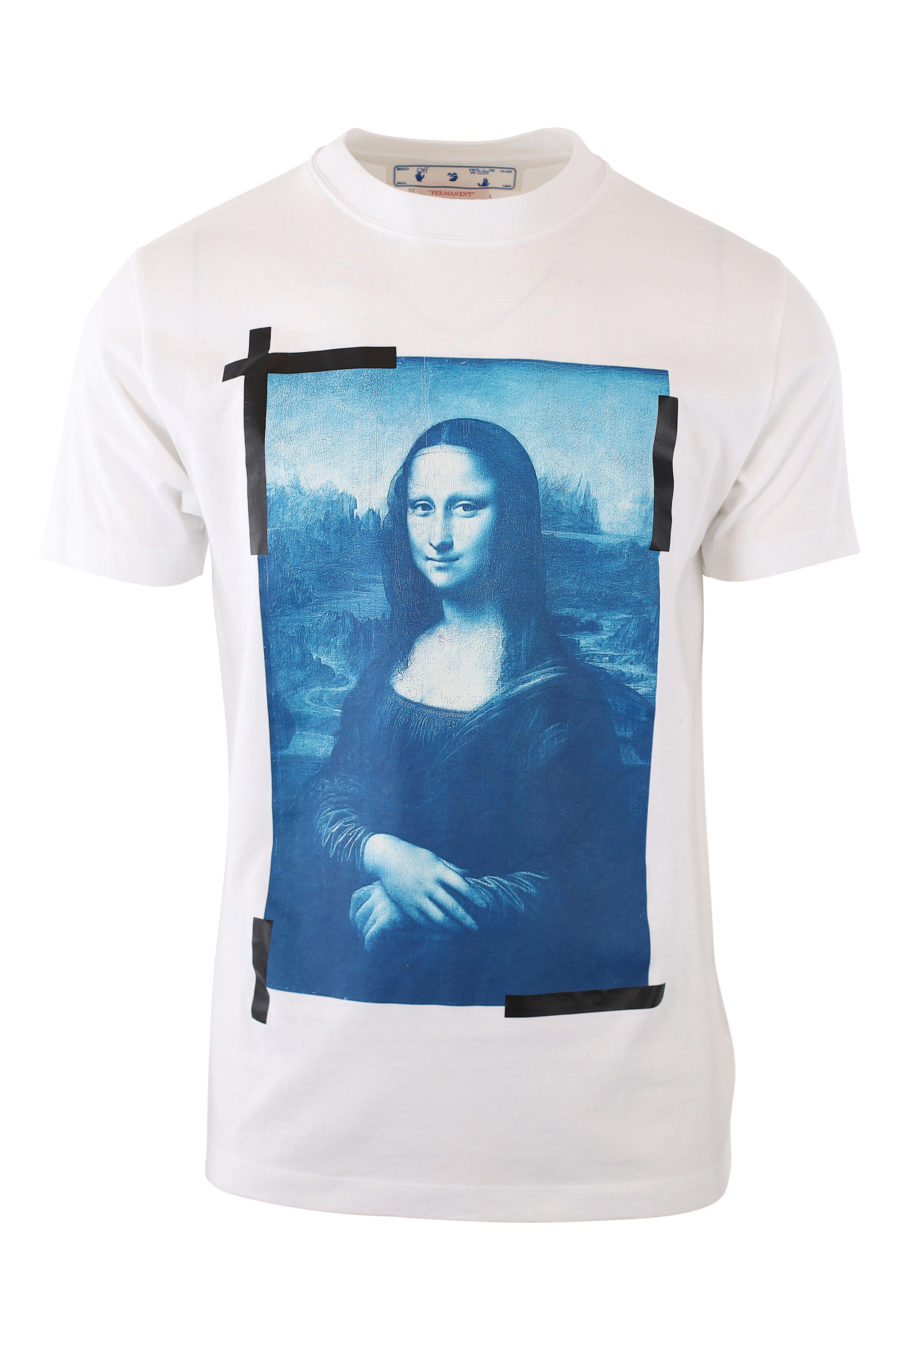 Camiseta blanca con "Monalisa" en azul - IMG 2090